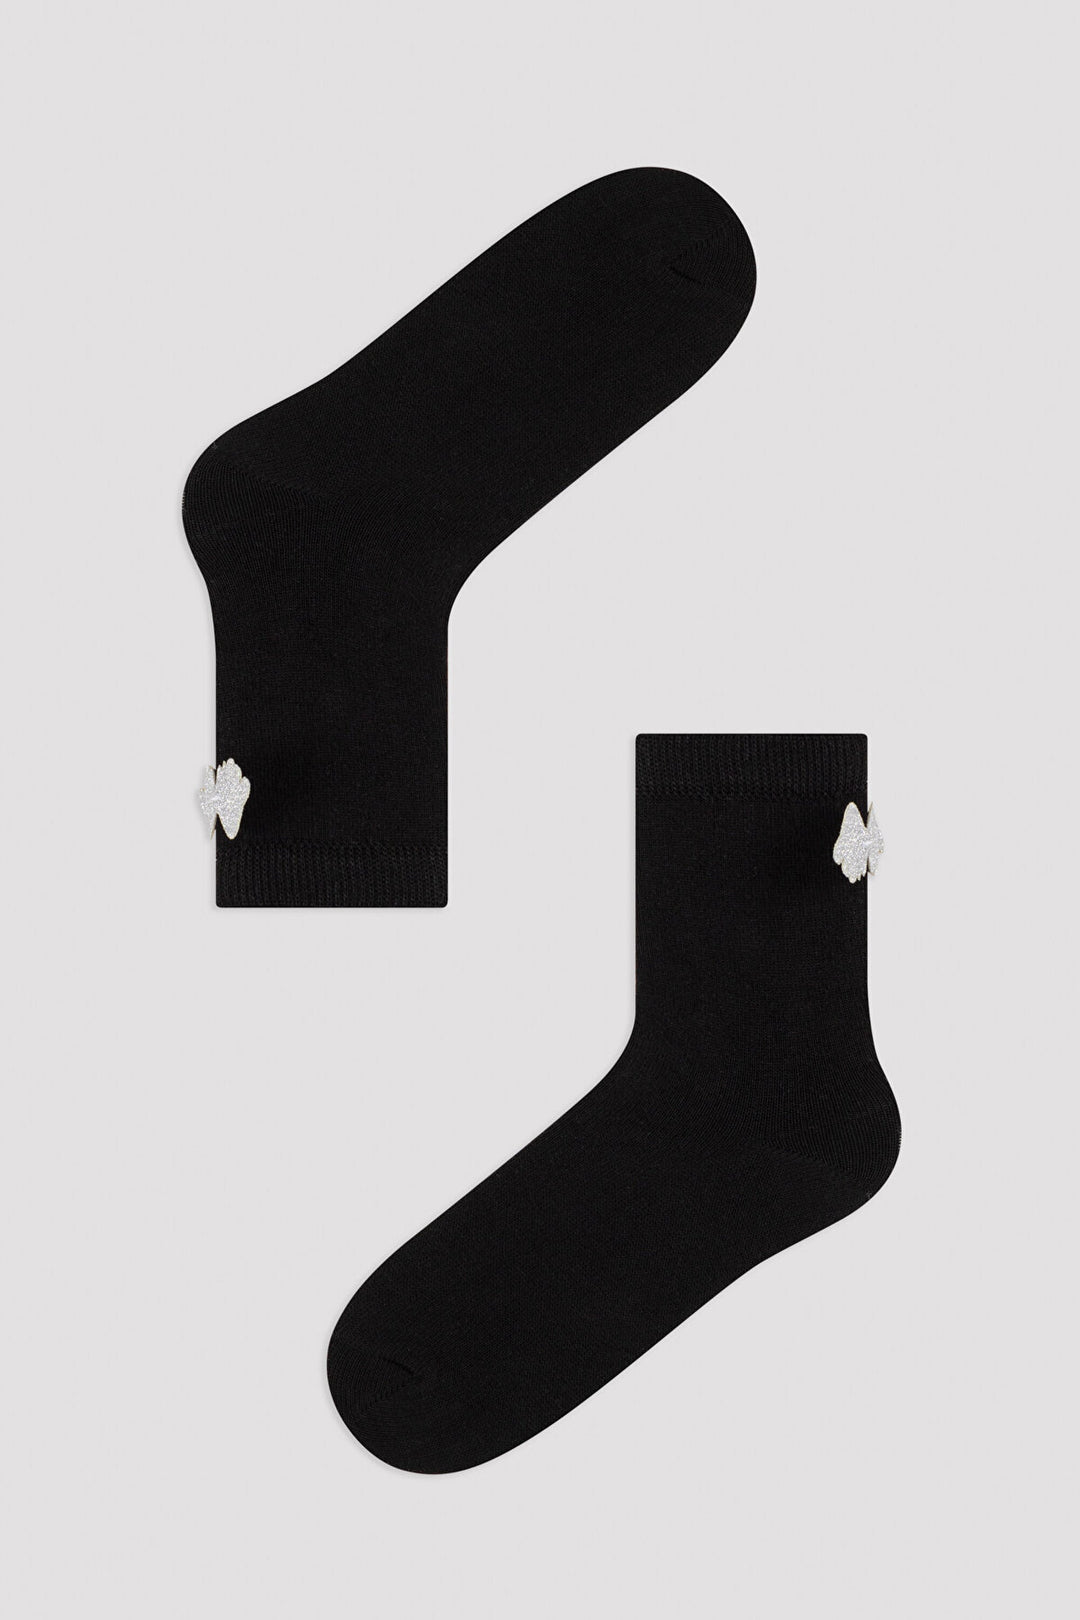 Black Girls G. Black Wing Soket Socks